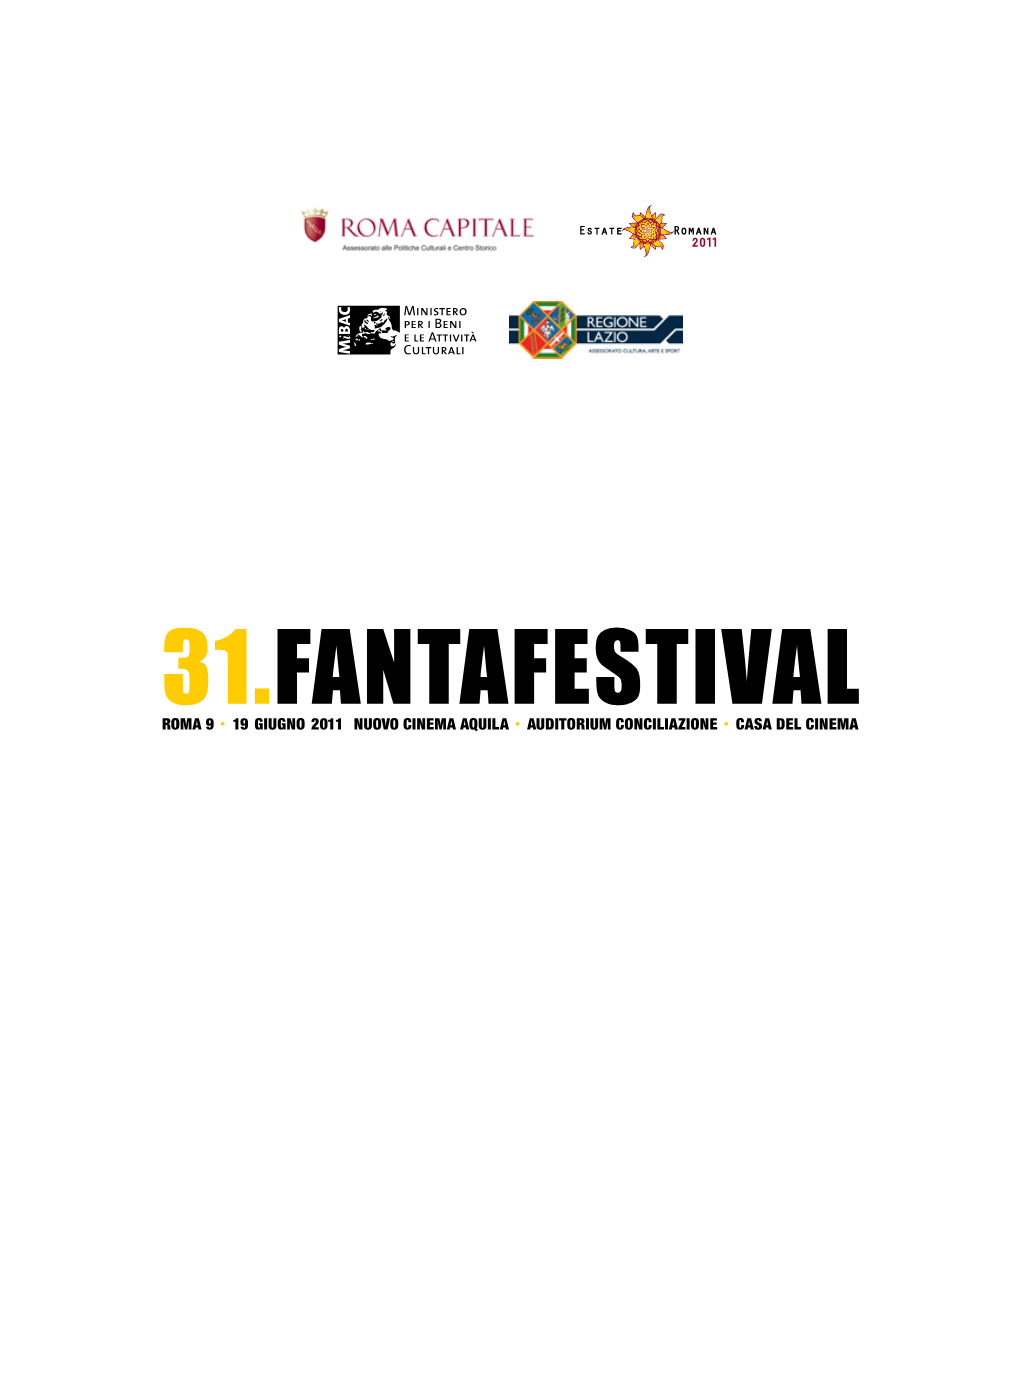 Catalogo Fantafestival 2011